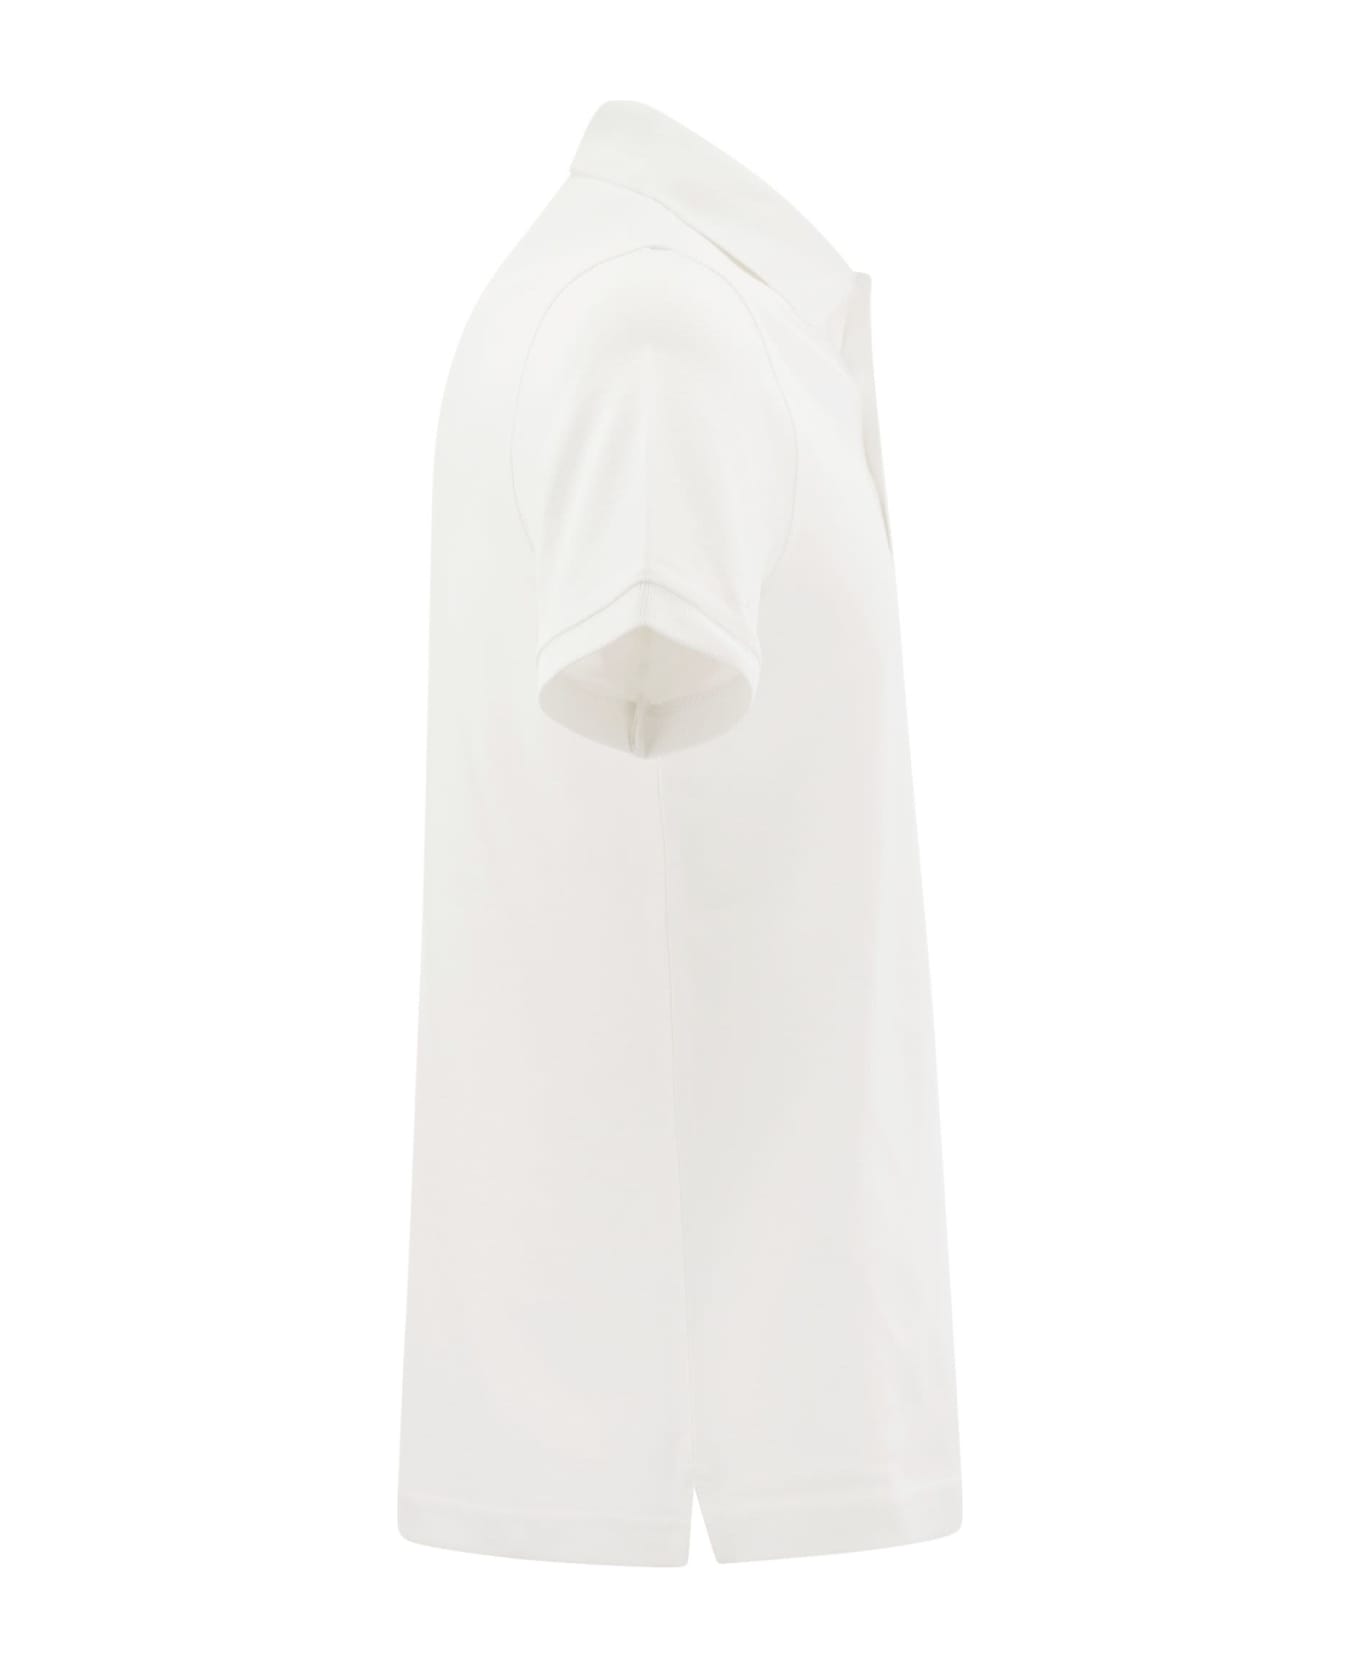 Fay Stretch Cotton Polo Shirt - White ポロシャツ